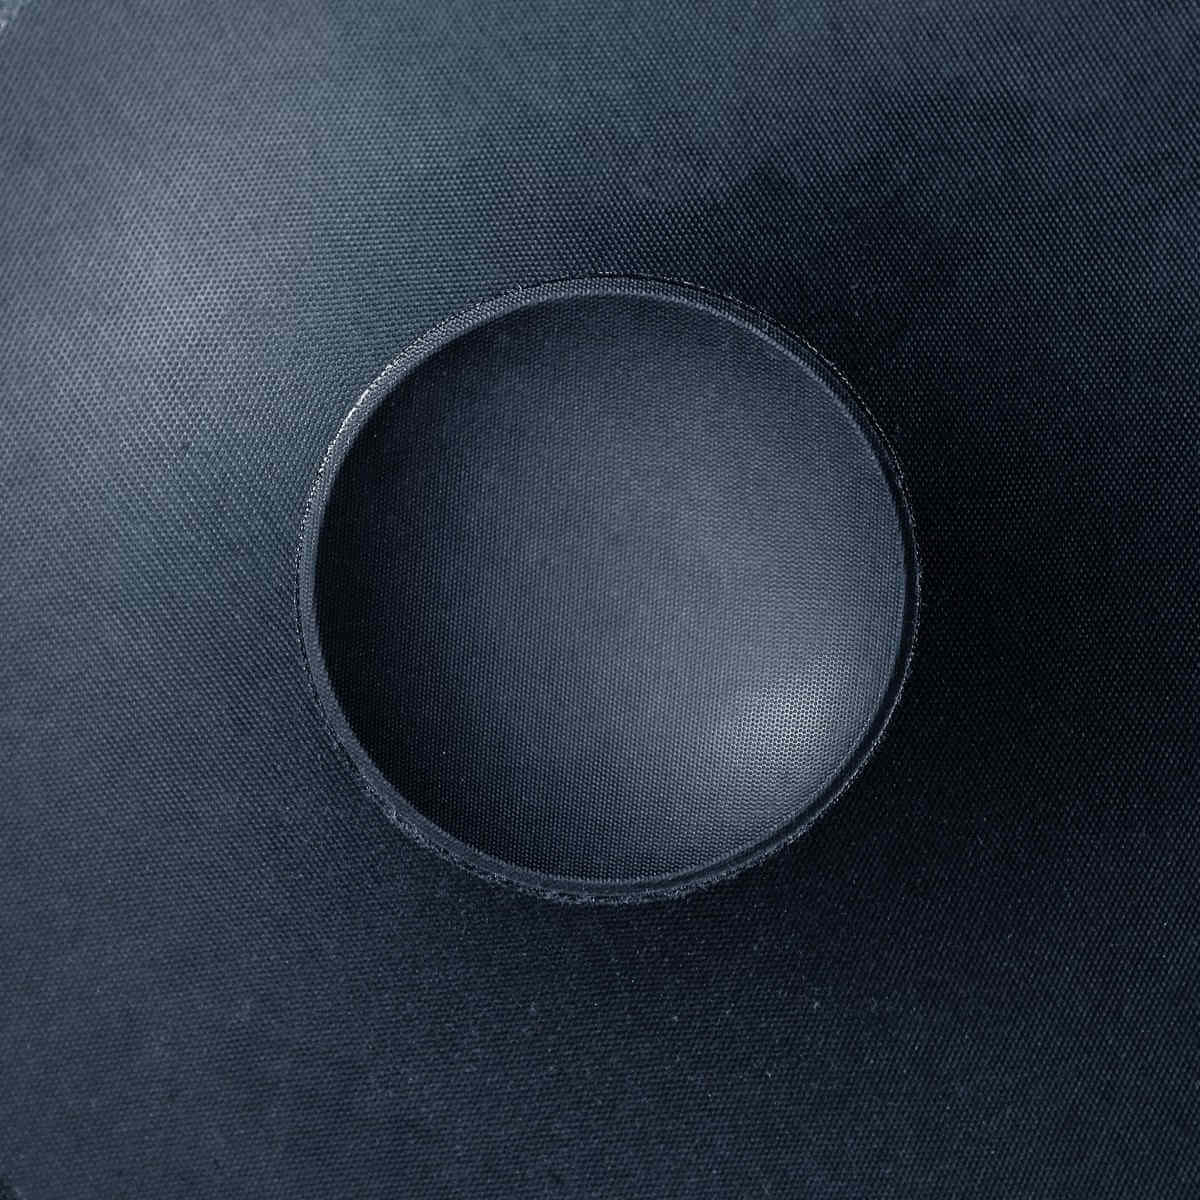 Black friday mini bluetooth speakers - speaker membrane close-up